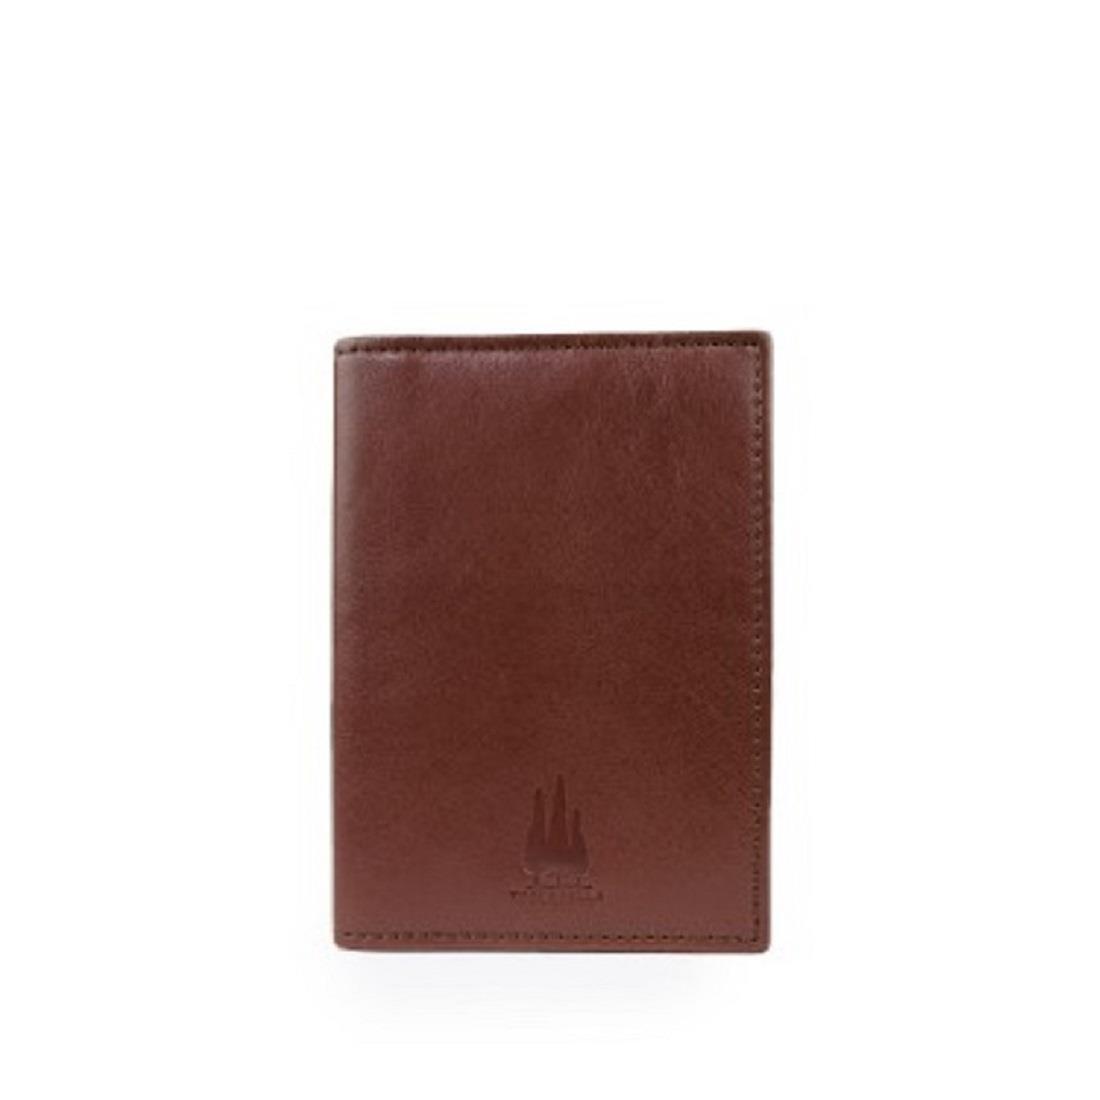 Brown leather card holder - PIEROTUCCI